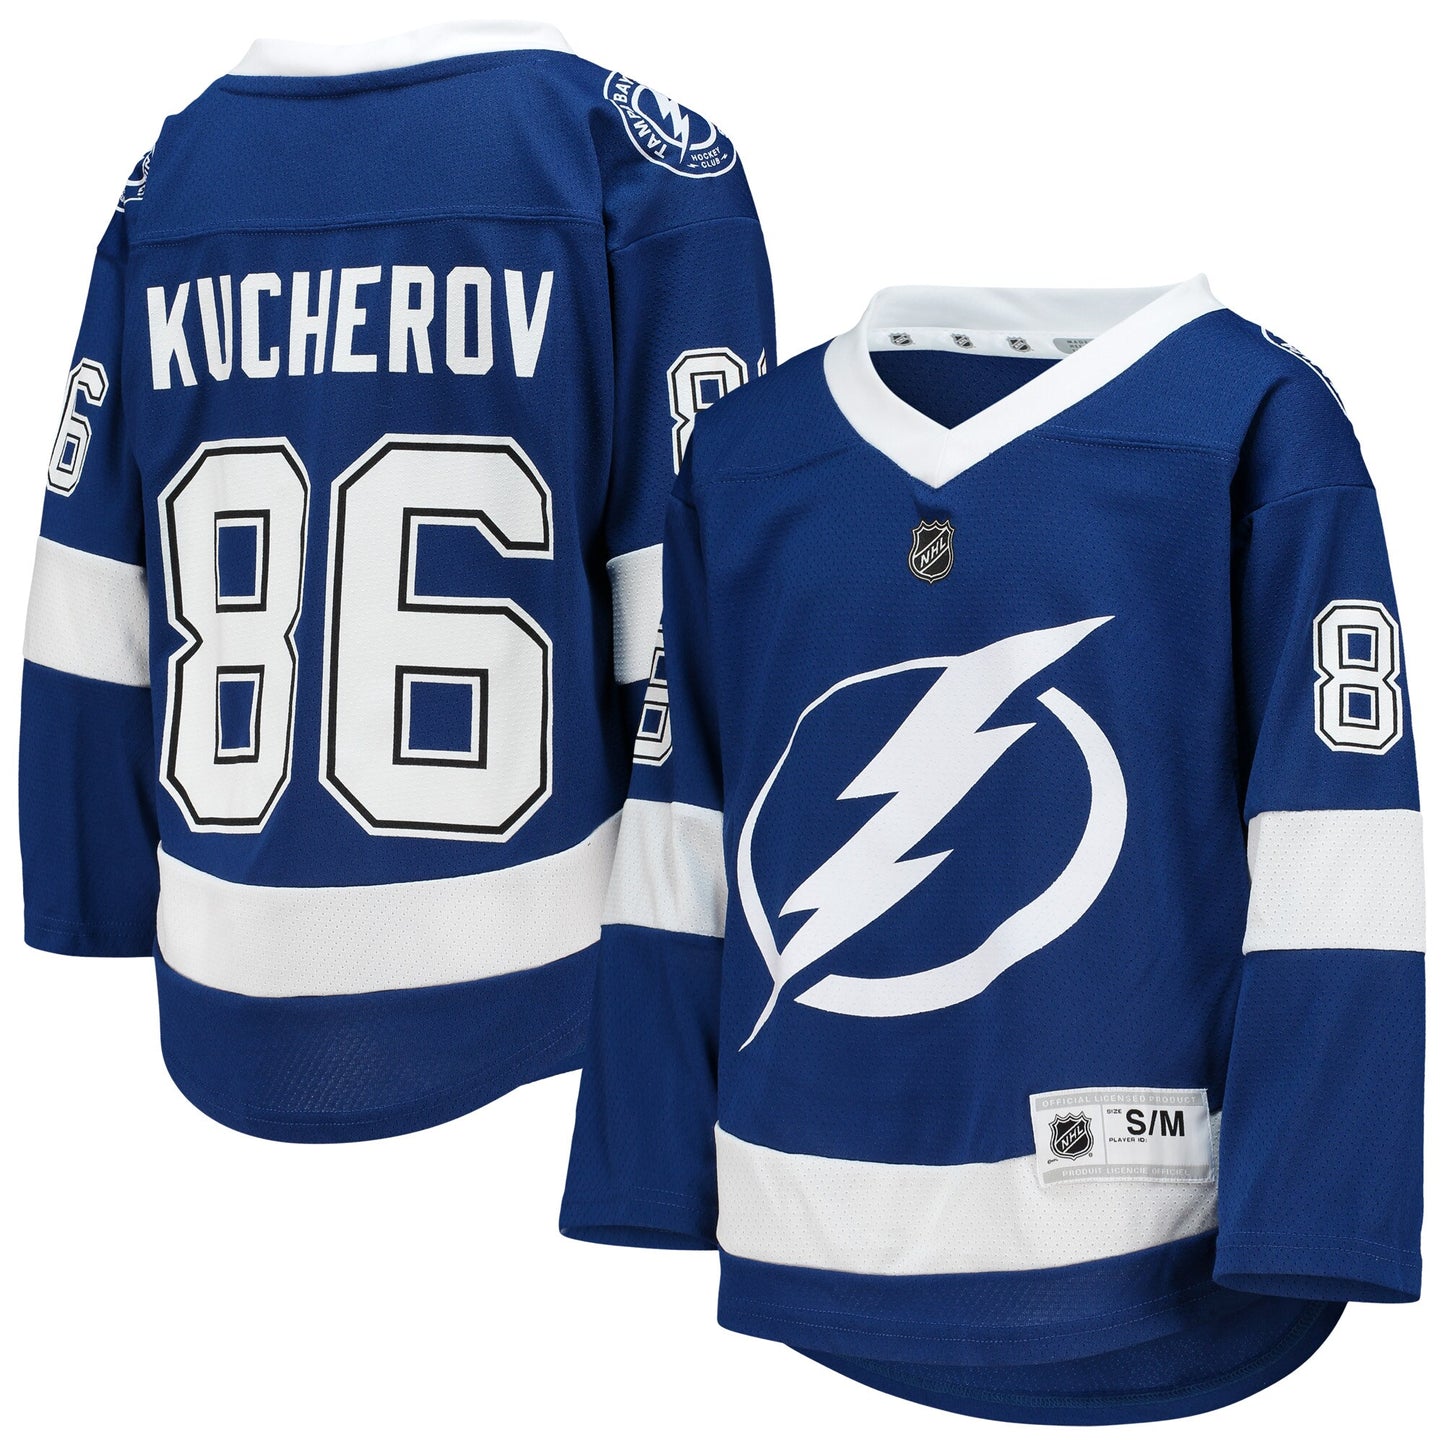 Nikita Kucherov Tampa Bay Lightning Youth Home Replica Player Jersey - Blue